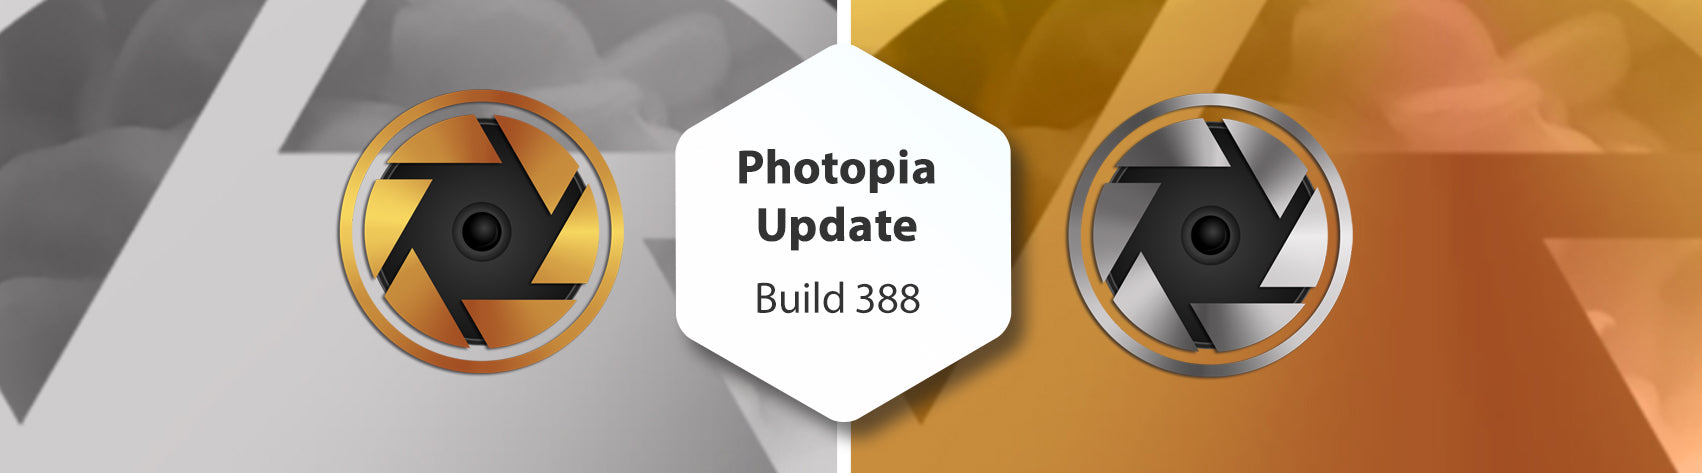 Photopia Update - Build 388